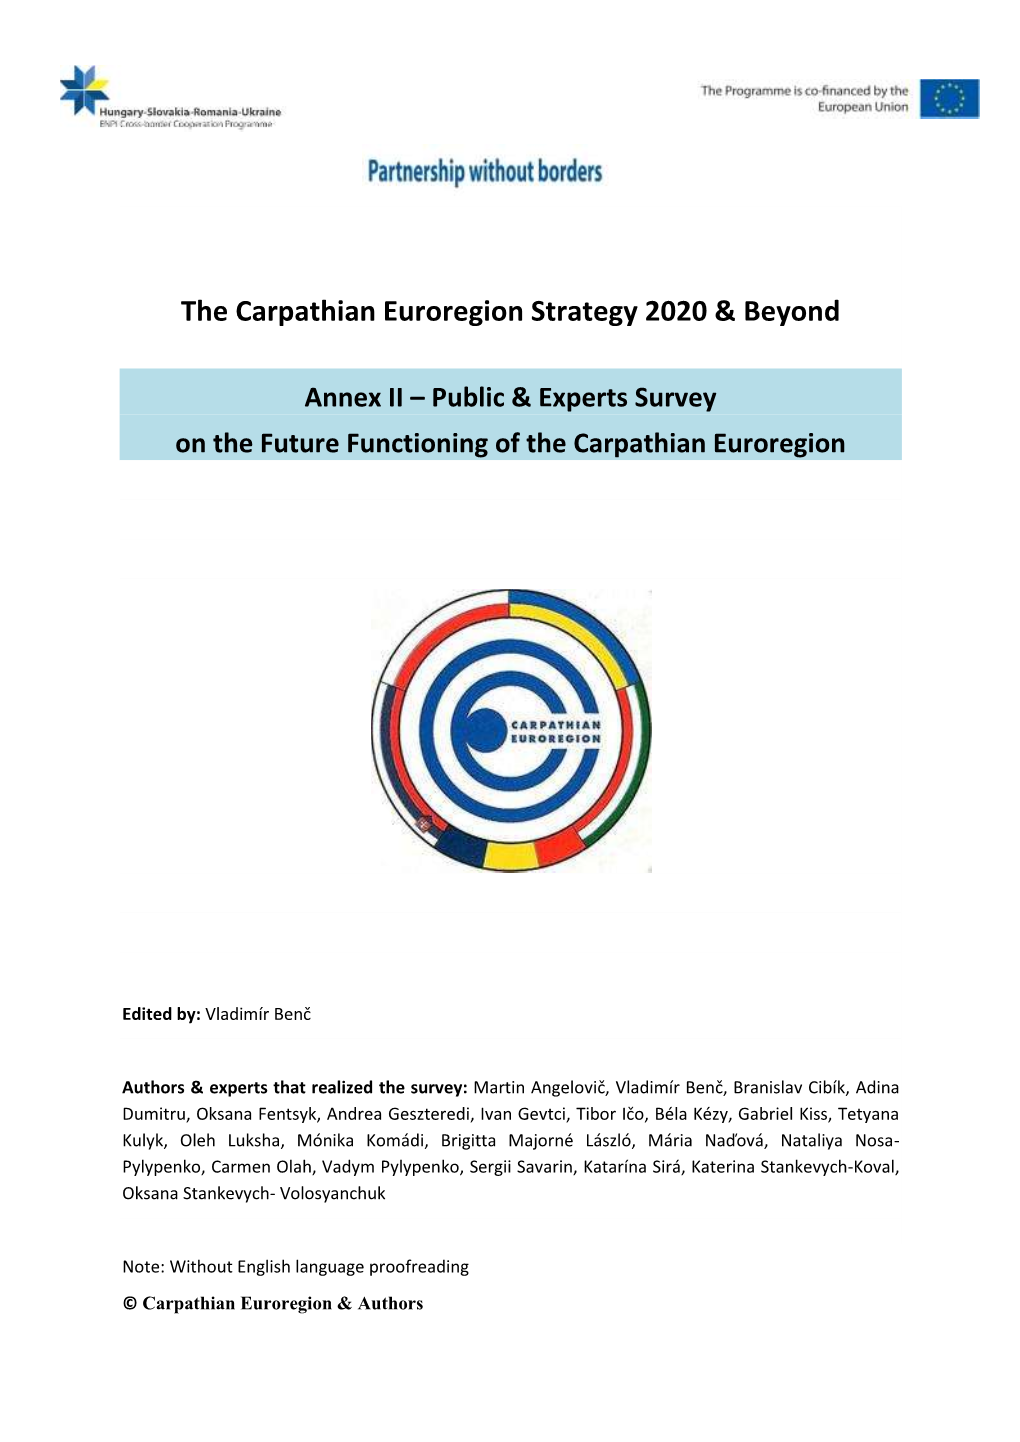 The Carpathian Euroregion Strategy 2020 & Beyond